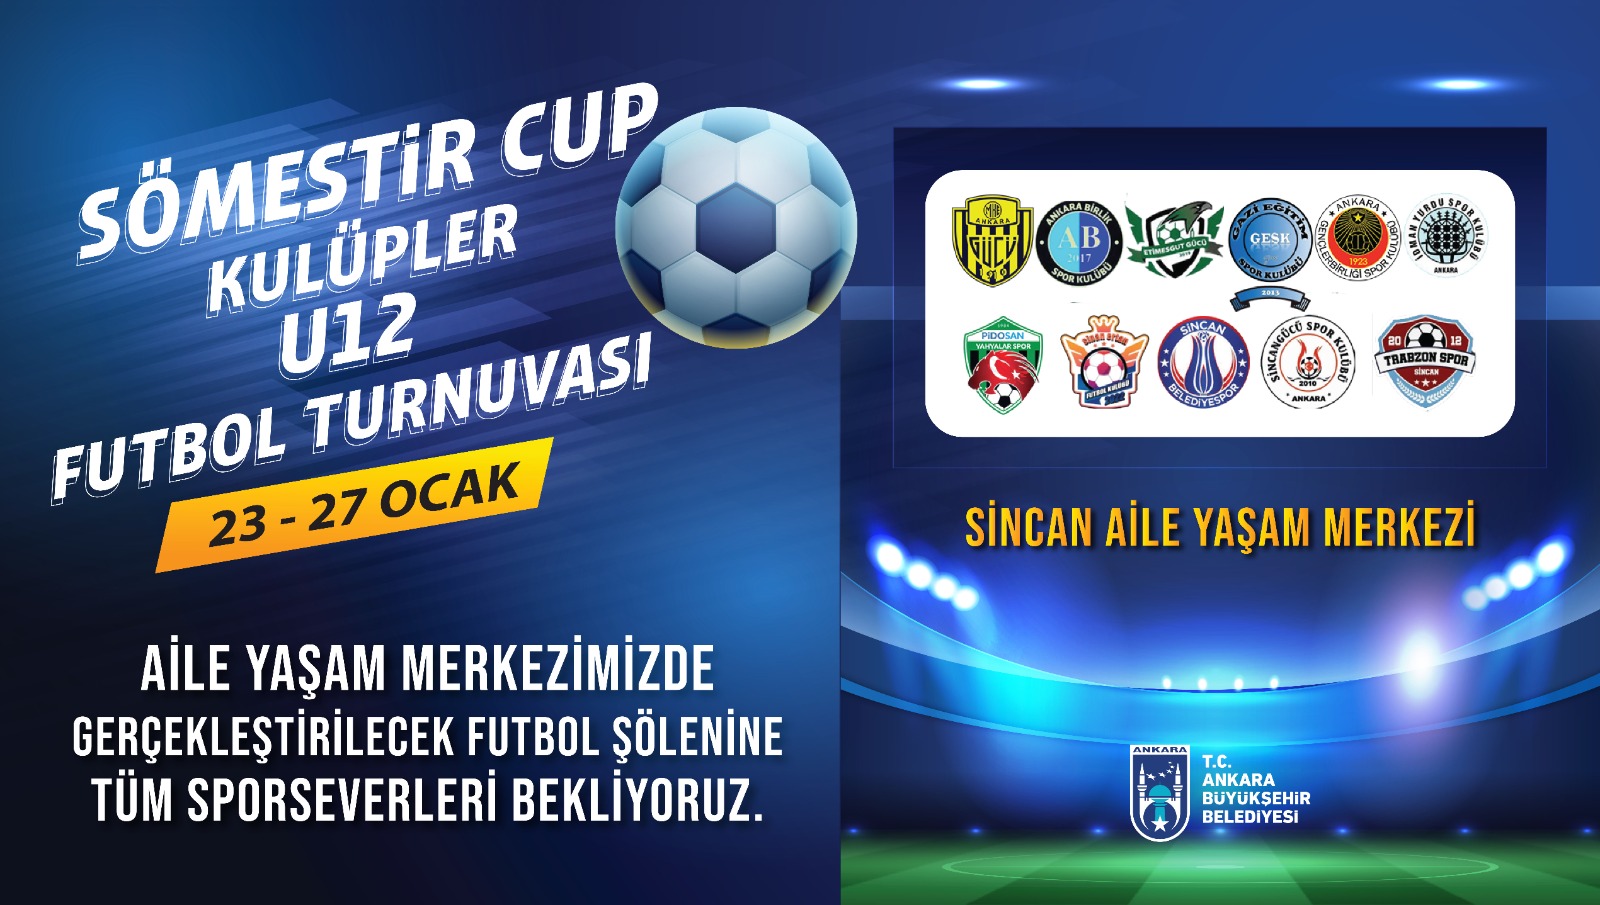 Sömestir Cup Kulüpler U12 Futbol Turnuvası 